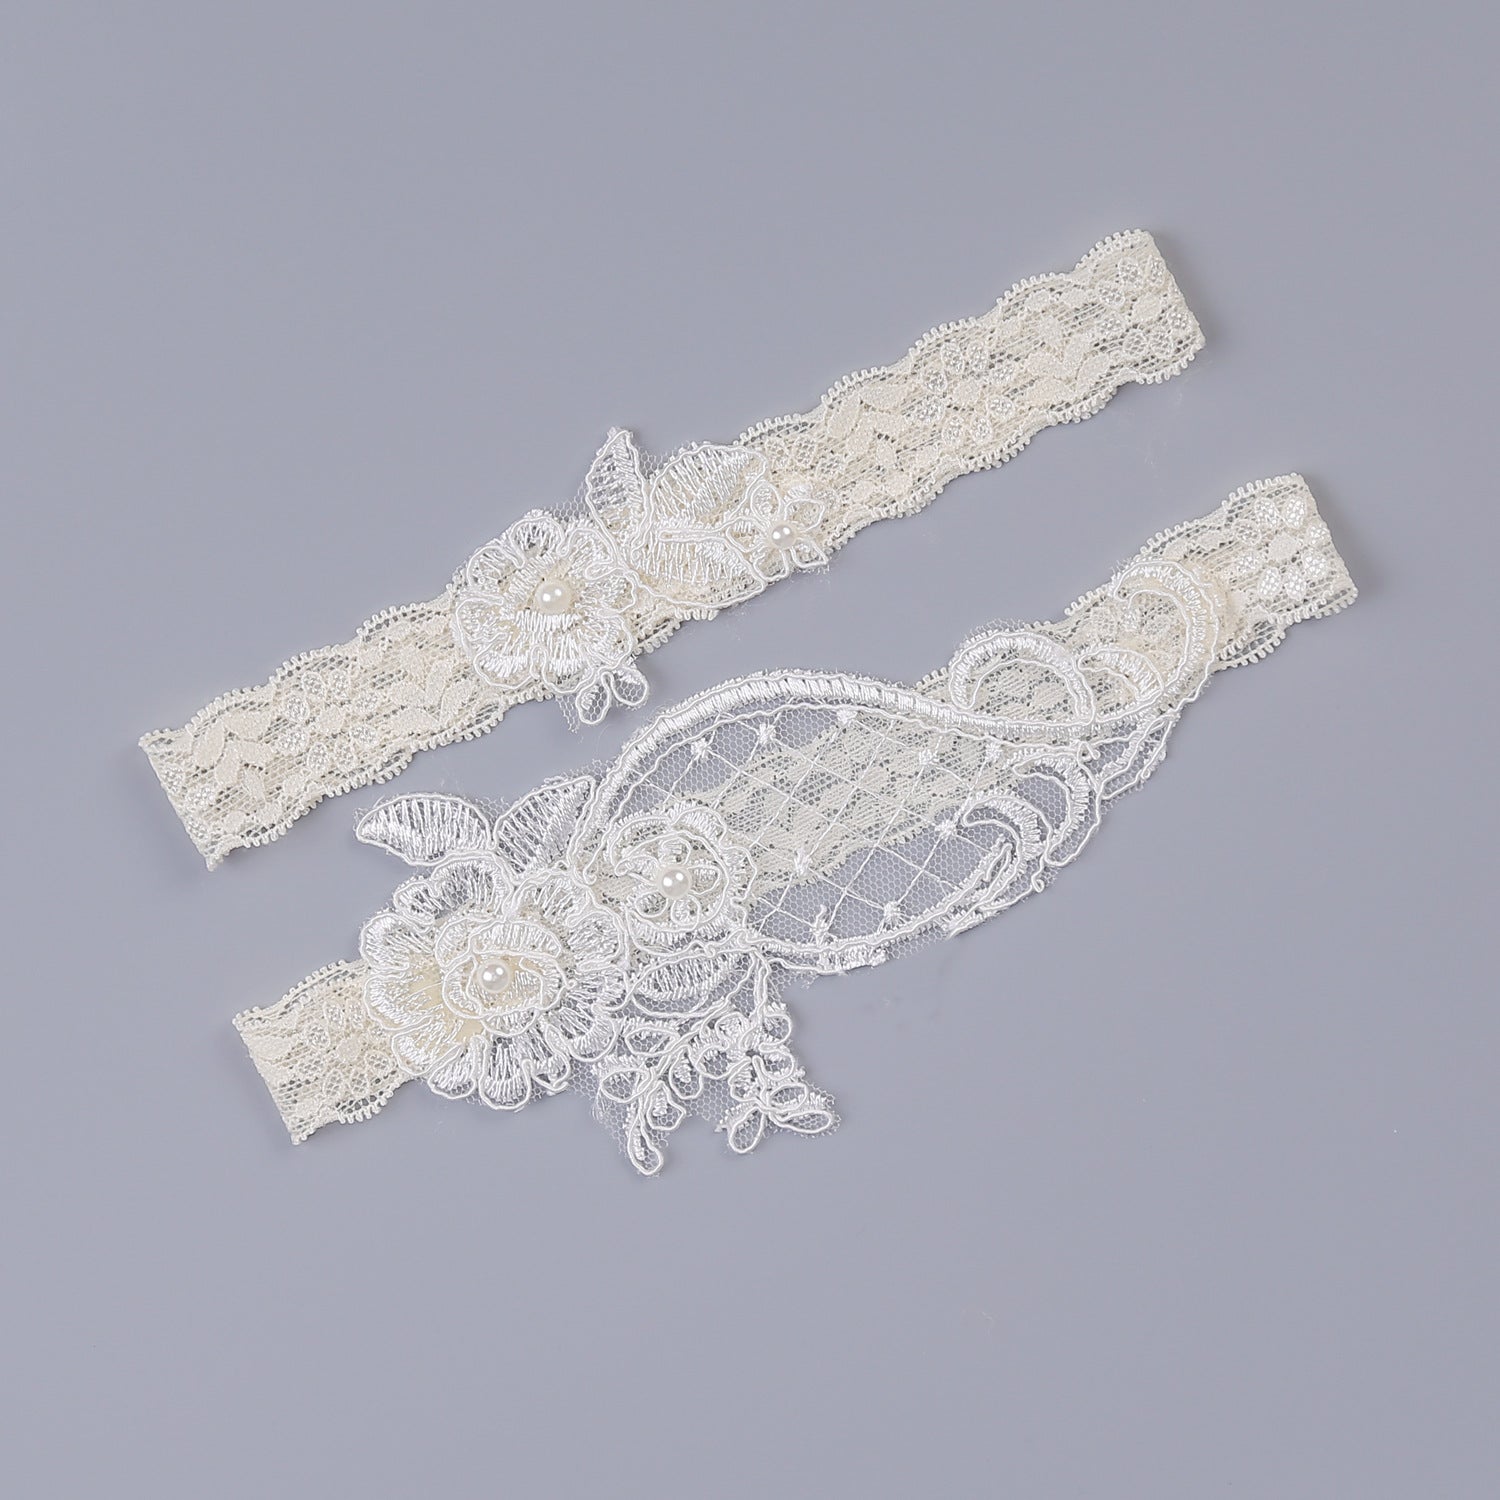 Handmade pearl bridal lace garter